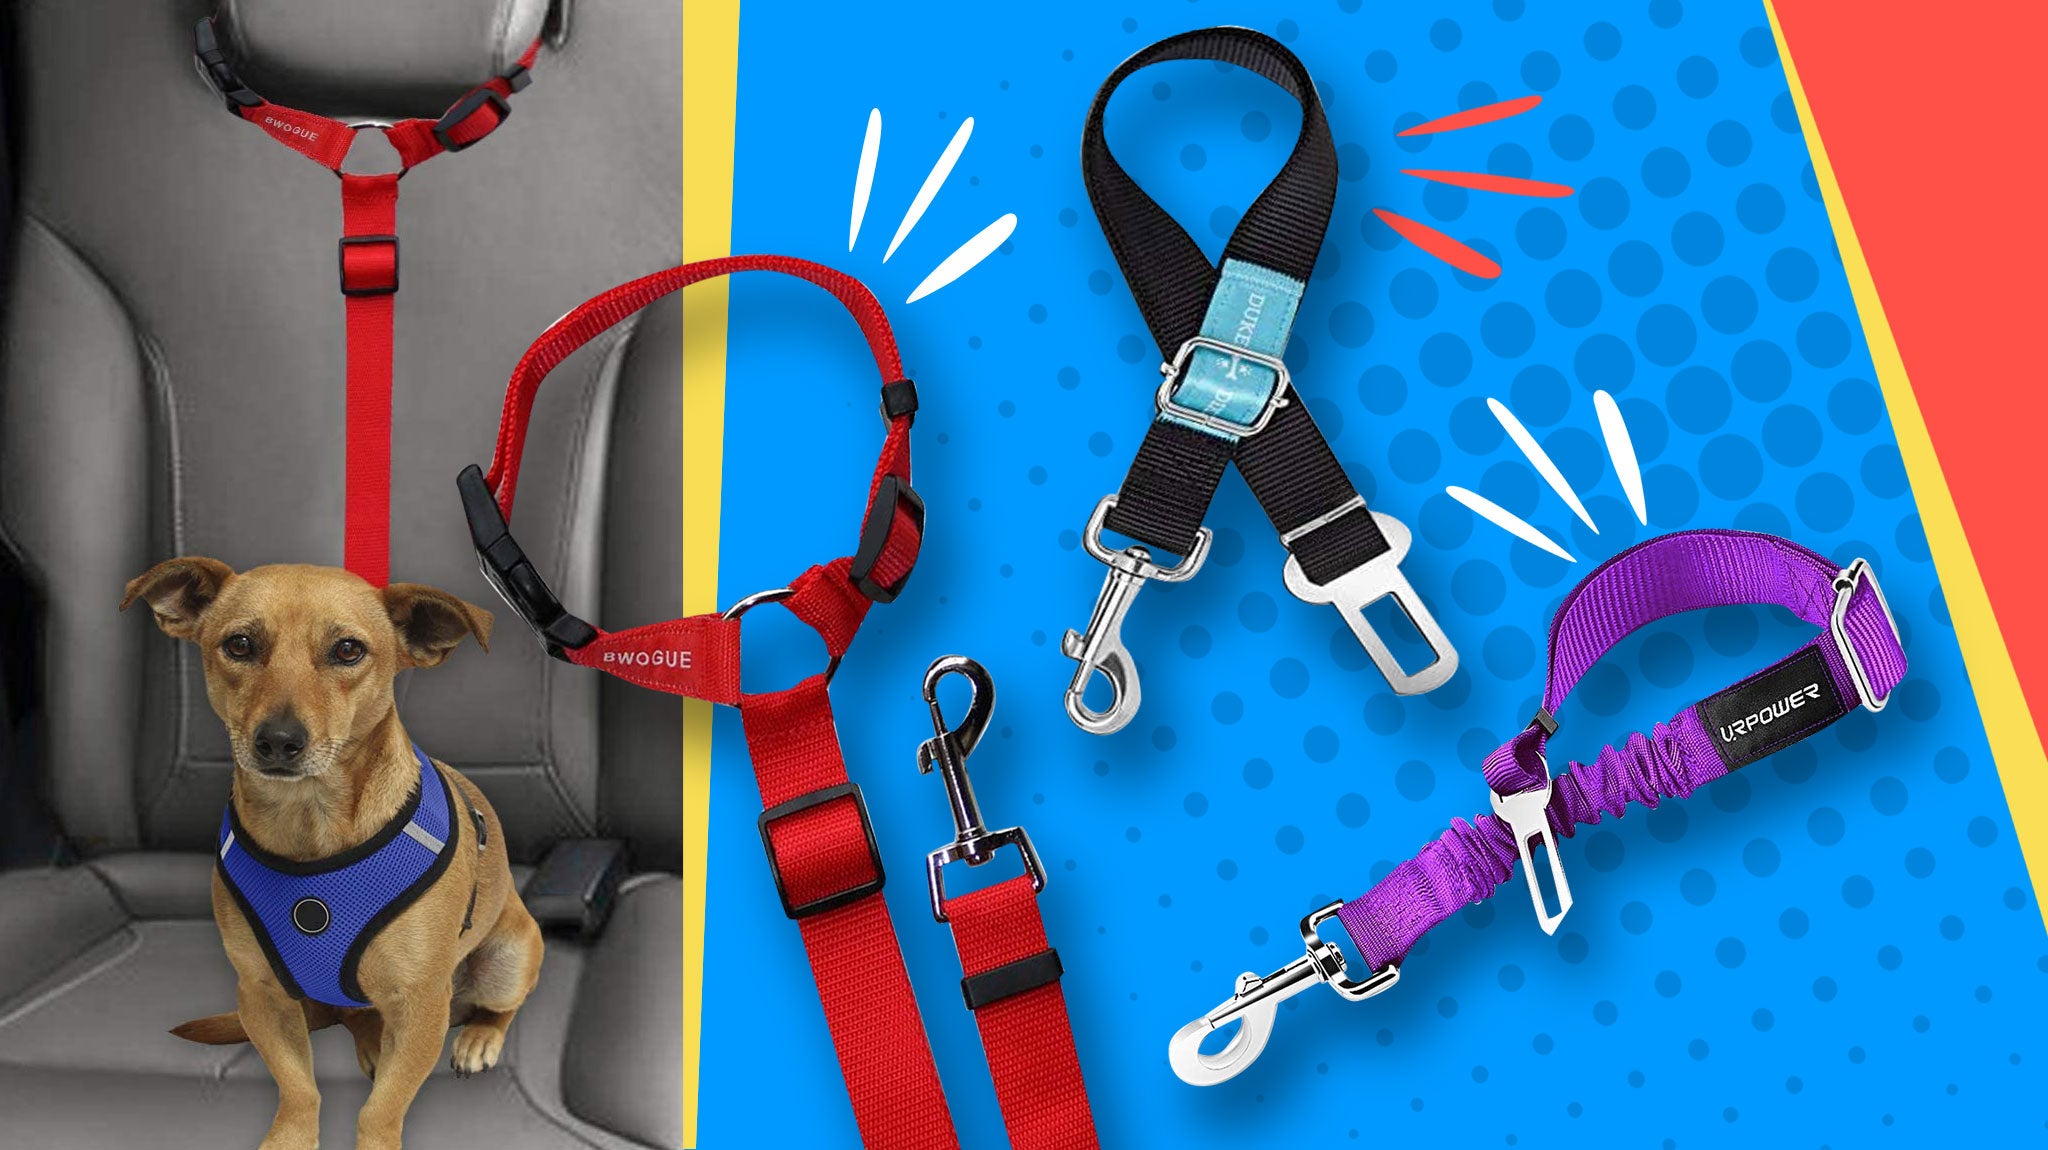 BWOGUE Pet Dog Cat Seat Belts Car Headrest Restraint Adjustable Safety Leads Vehicle Seatbelt Harness 